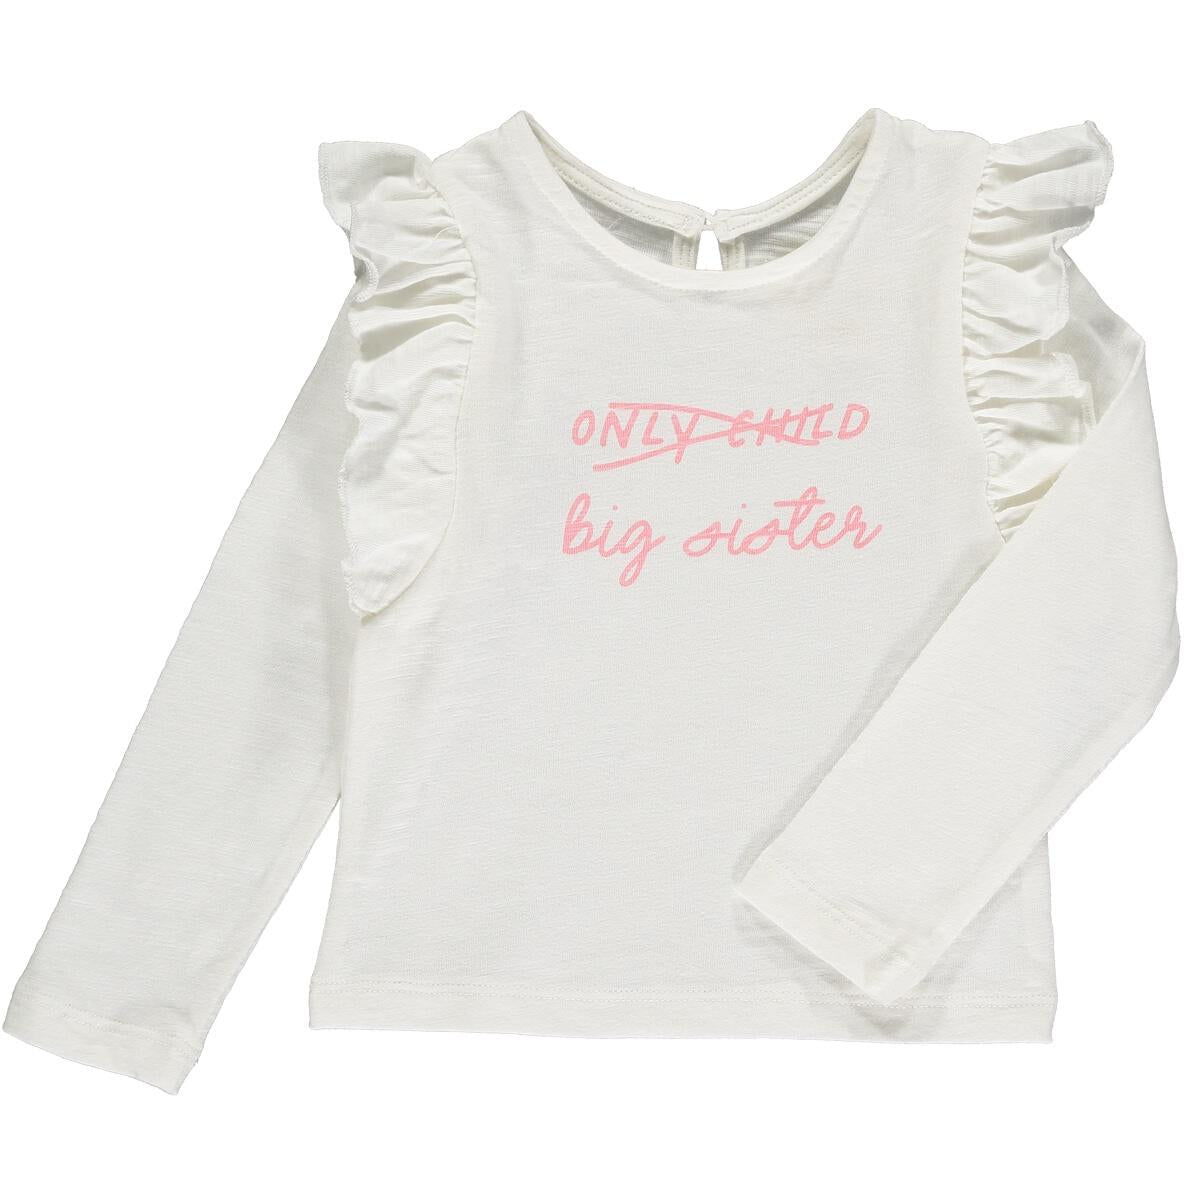 Only Child/Big Sister Shirt (FINAL SALE)